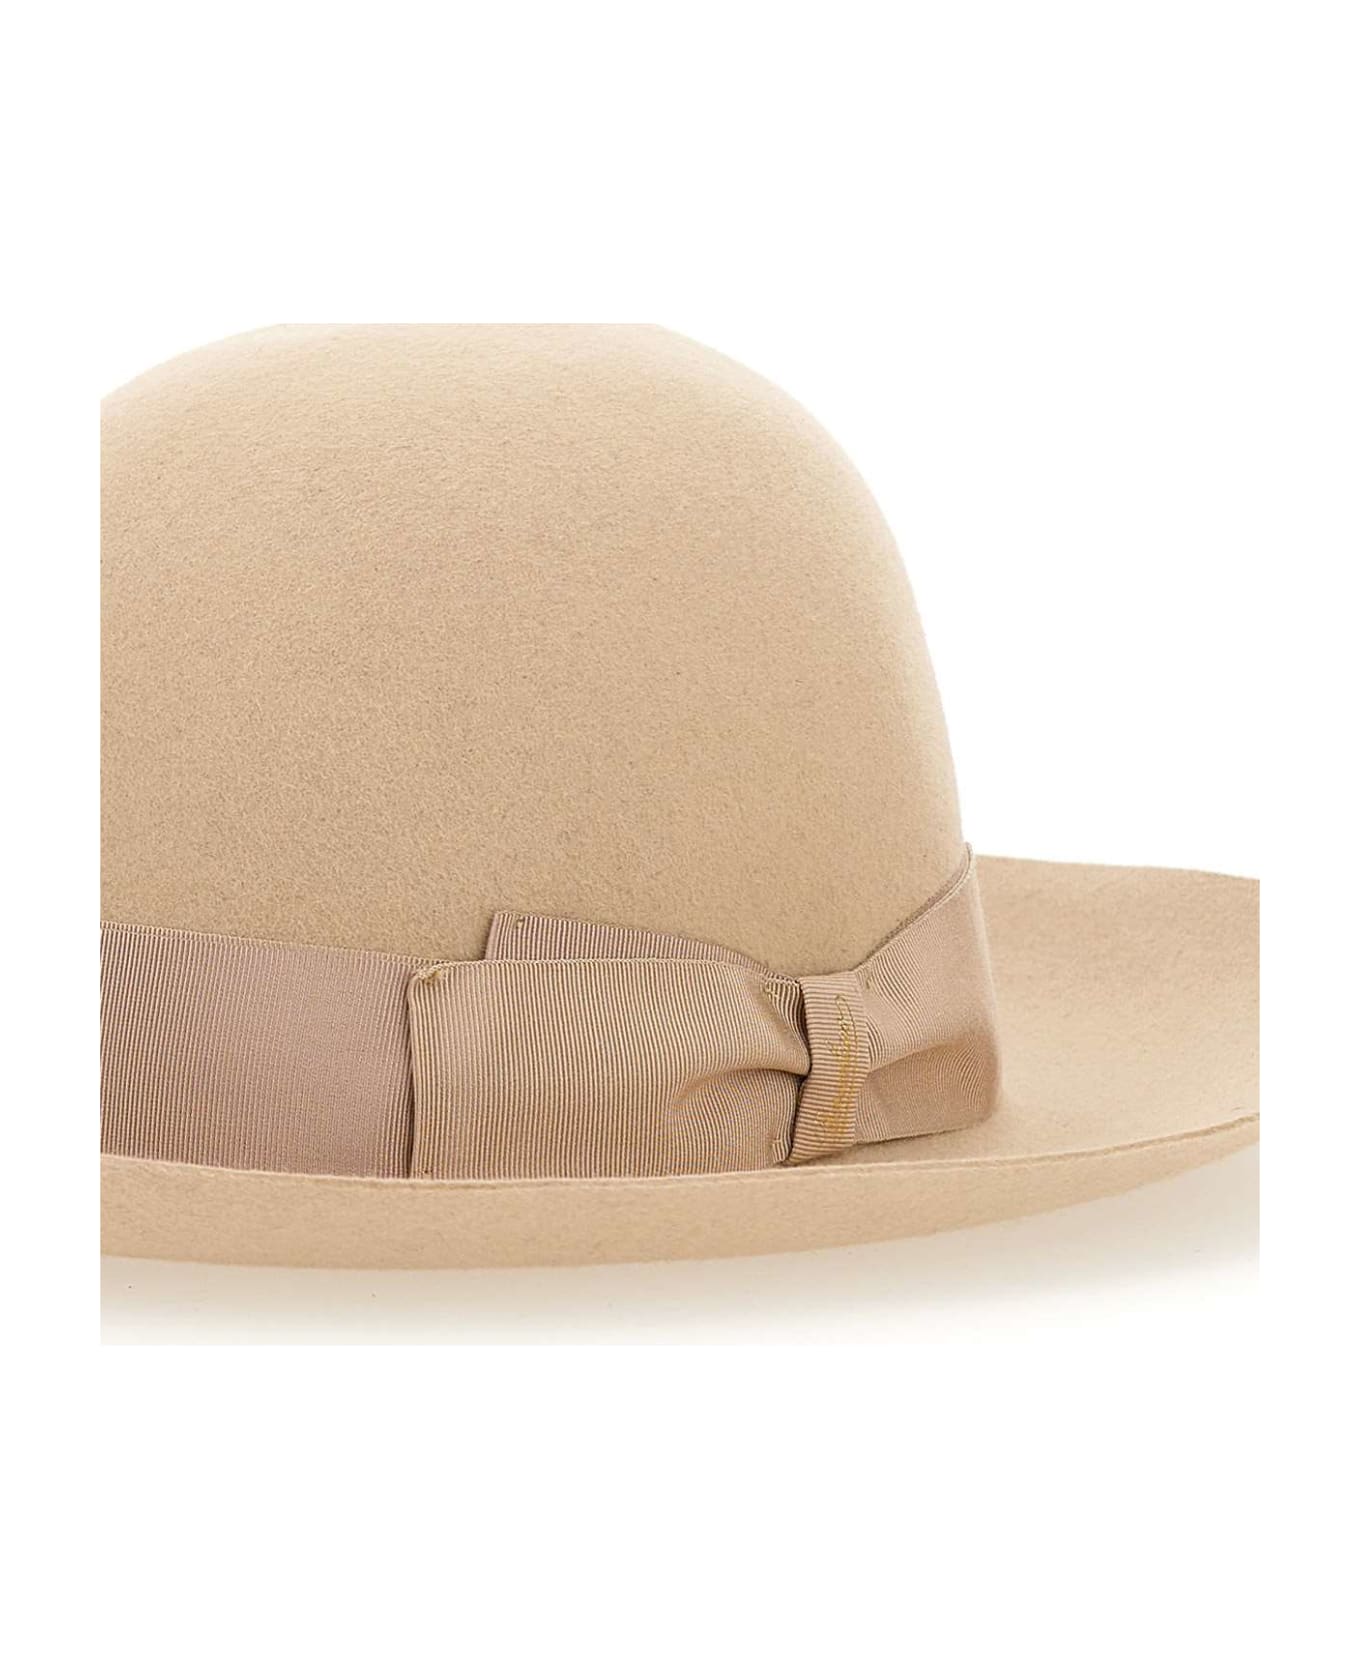 Borsalino "alessandria" Hat - BEIGE 帽子